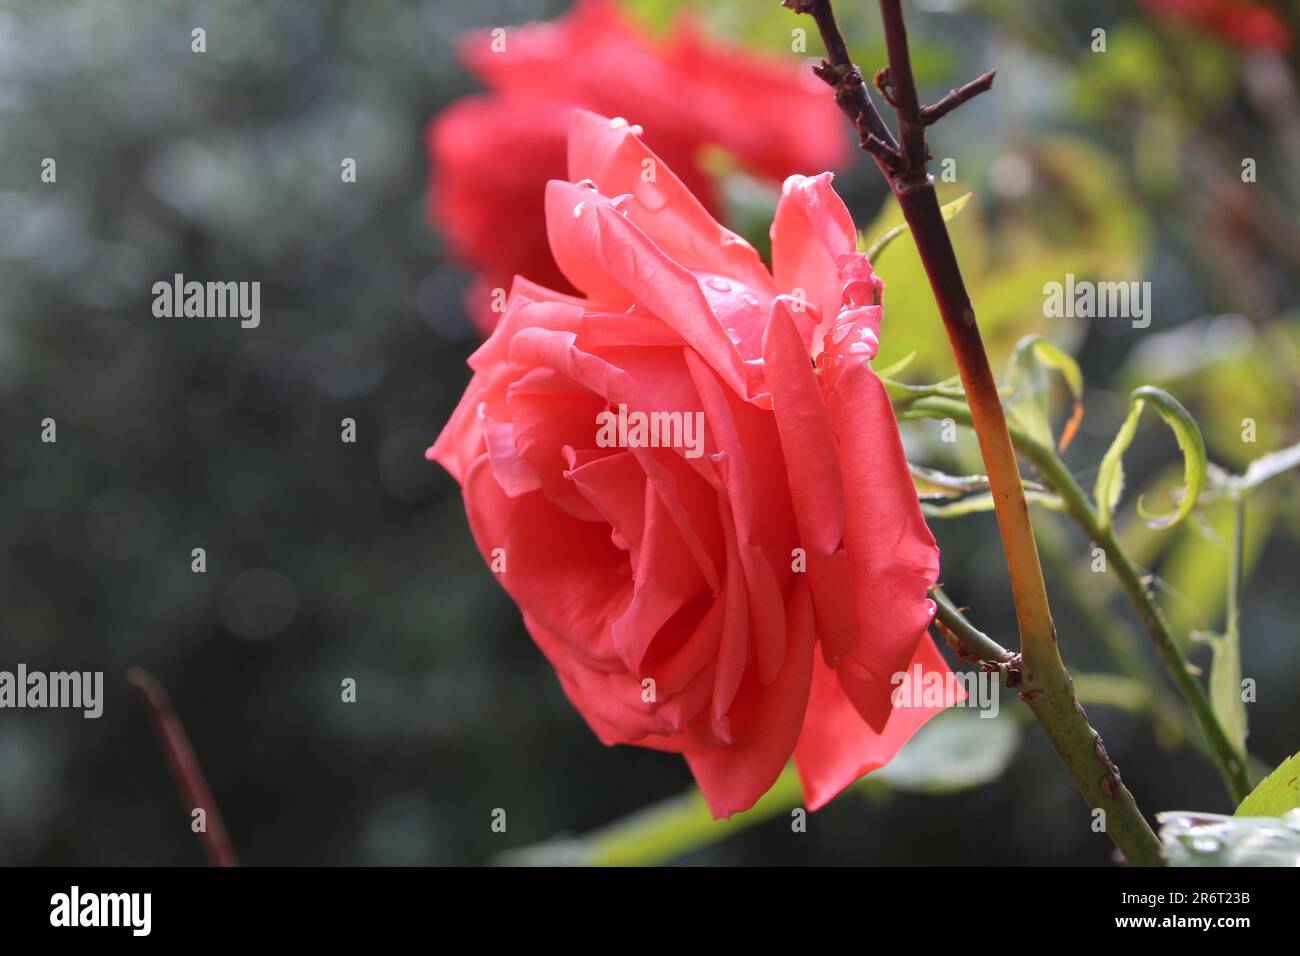 Beuatiful red rose Stock Photo